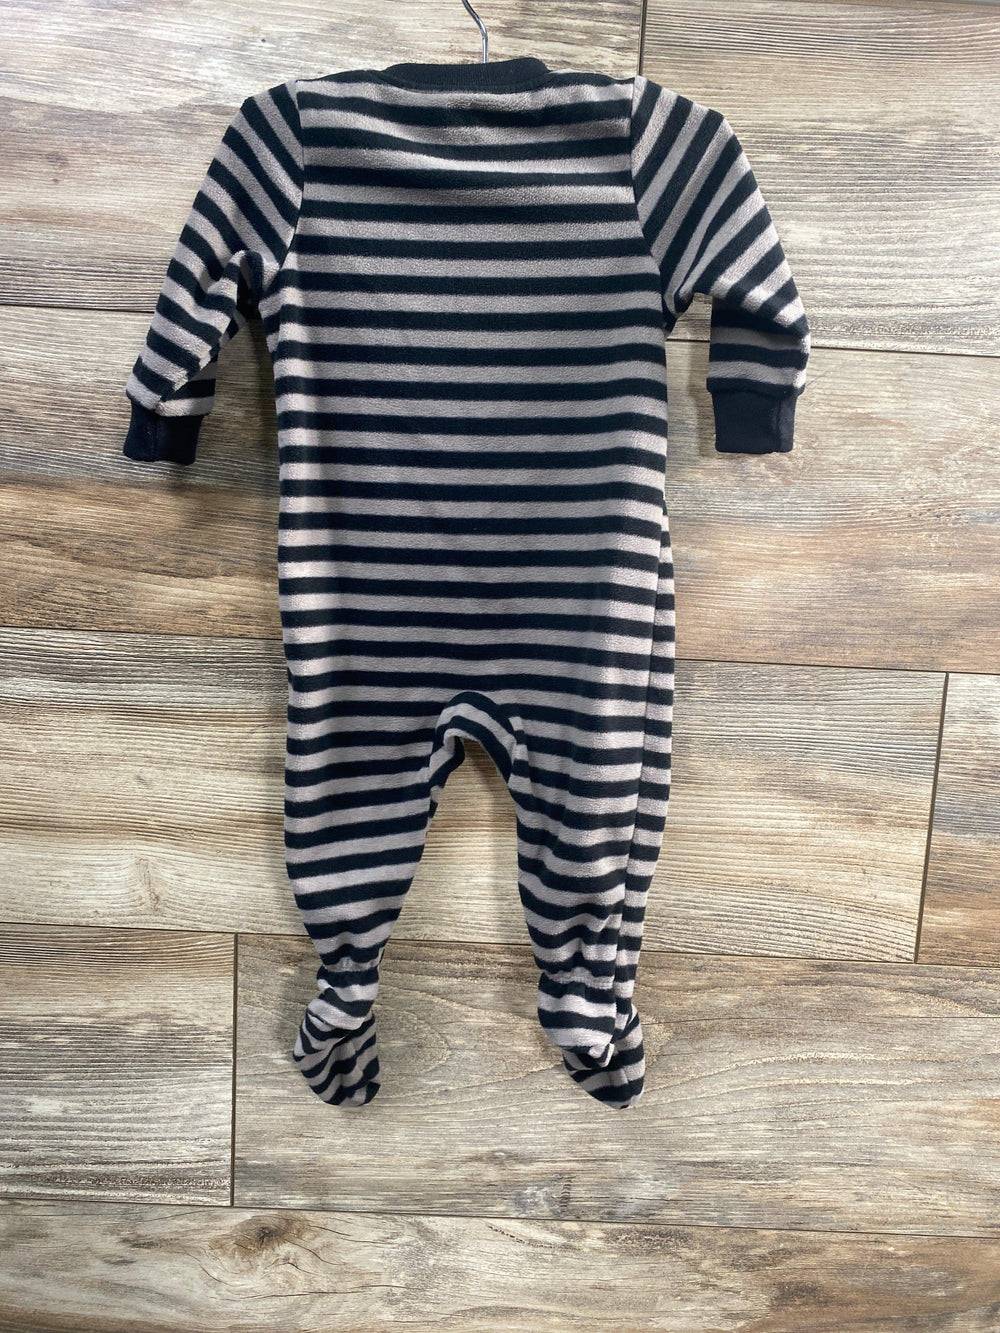 Carter's Black Striped Blanket Sleeper sz 6m - Me 'n Mommy To Be